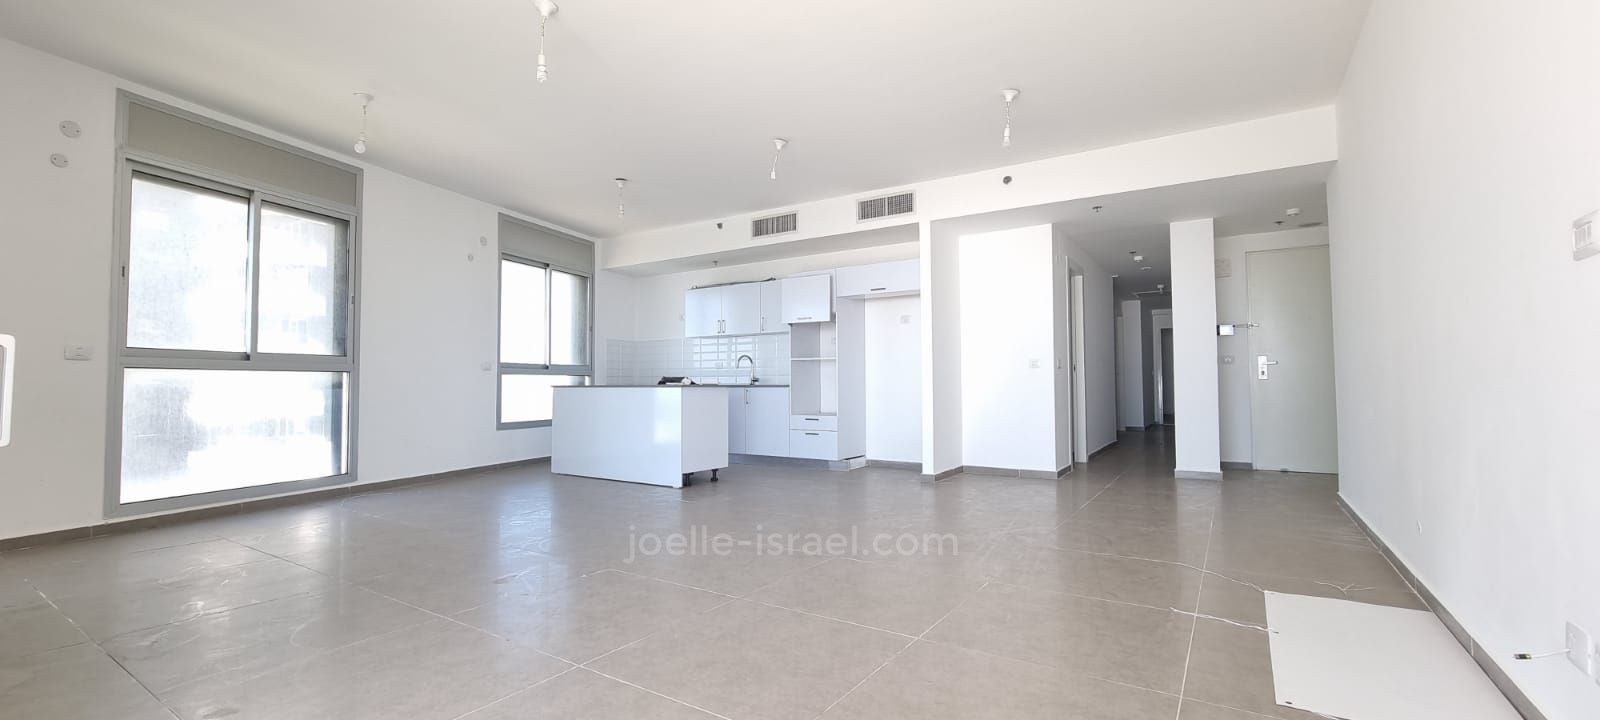 Apartment 4 Rooms Netanya Nat 600 316-IBL-1668